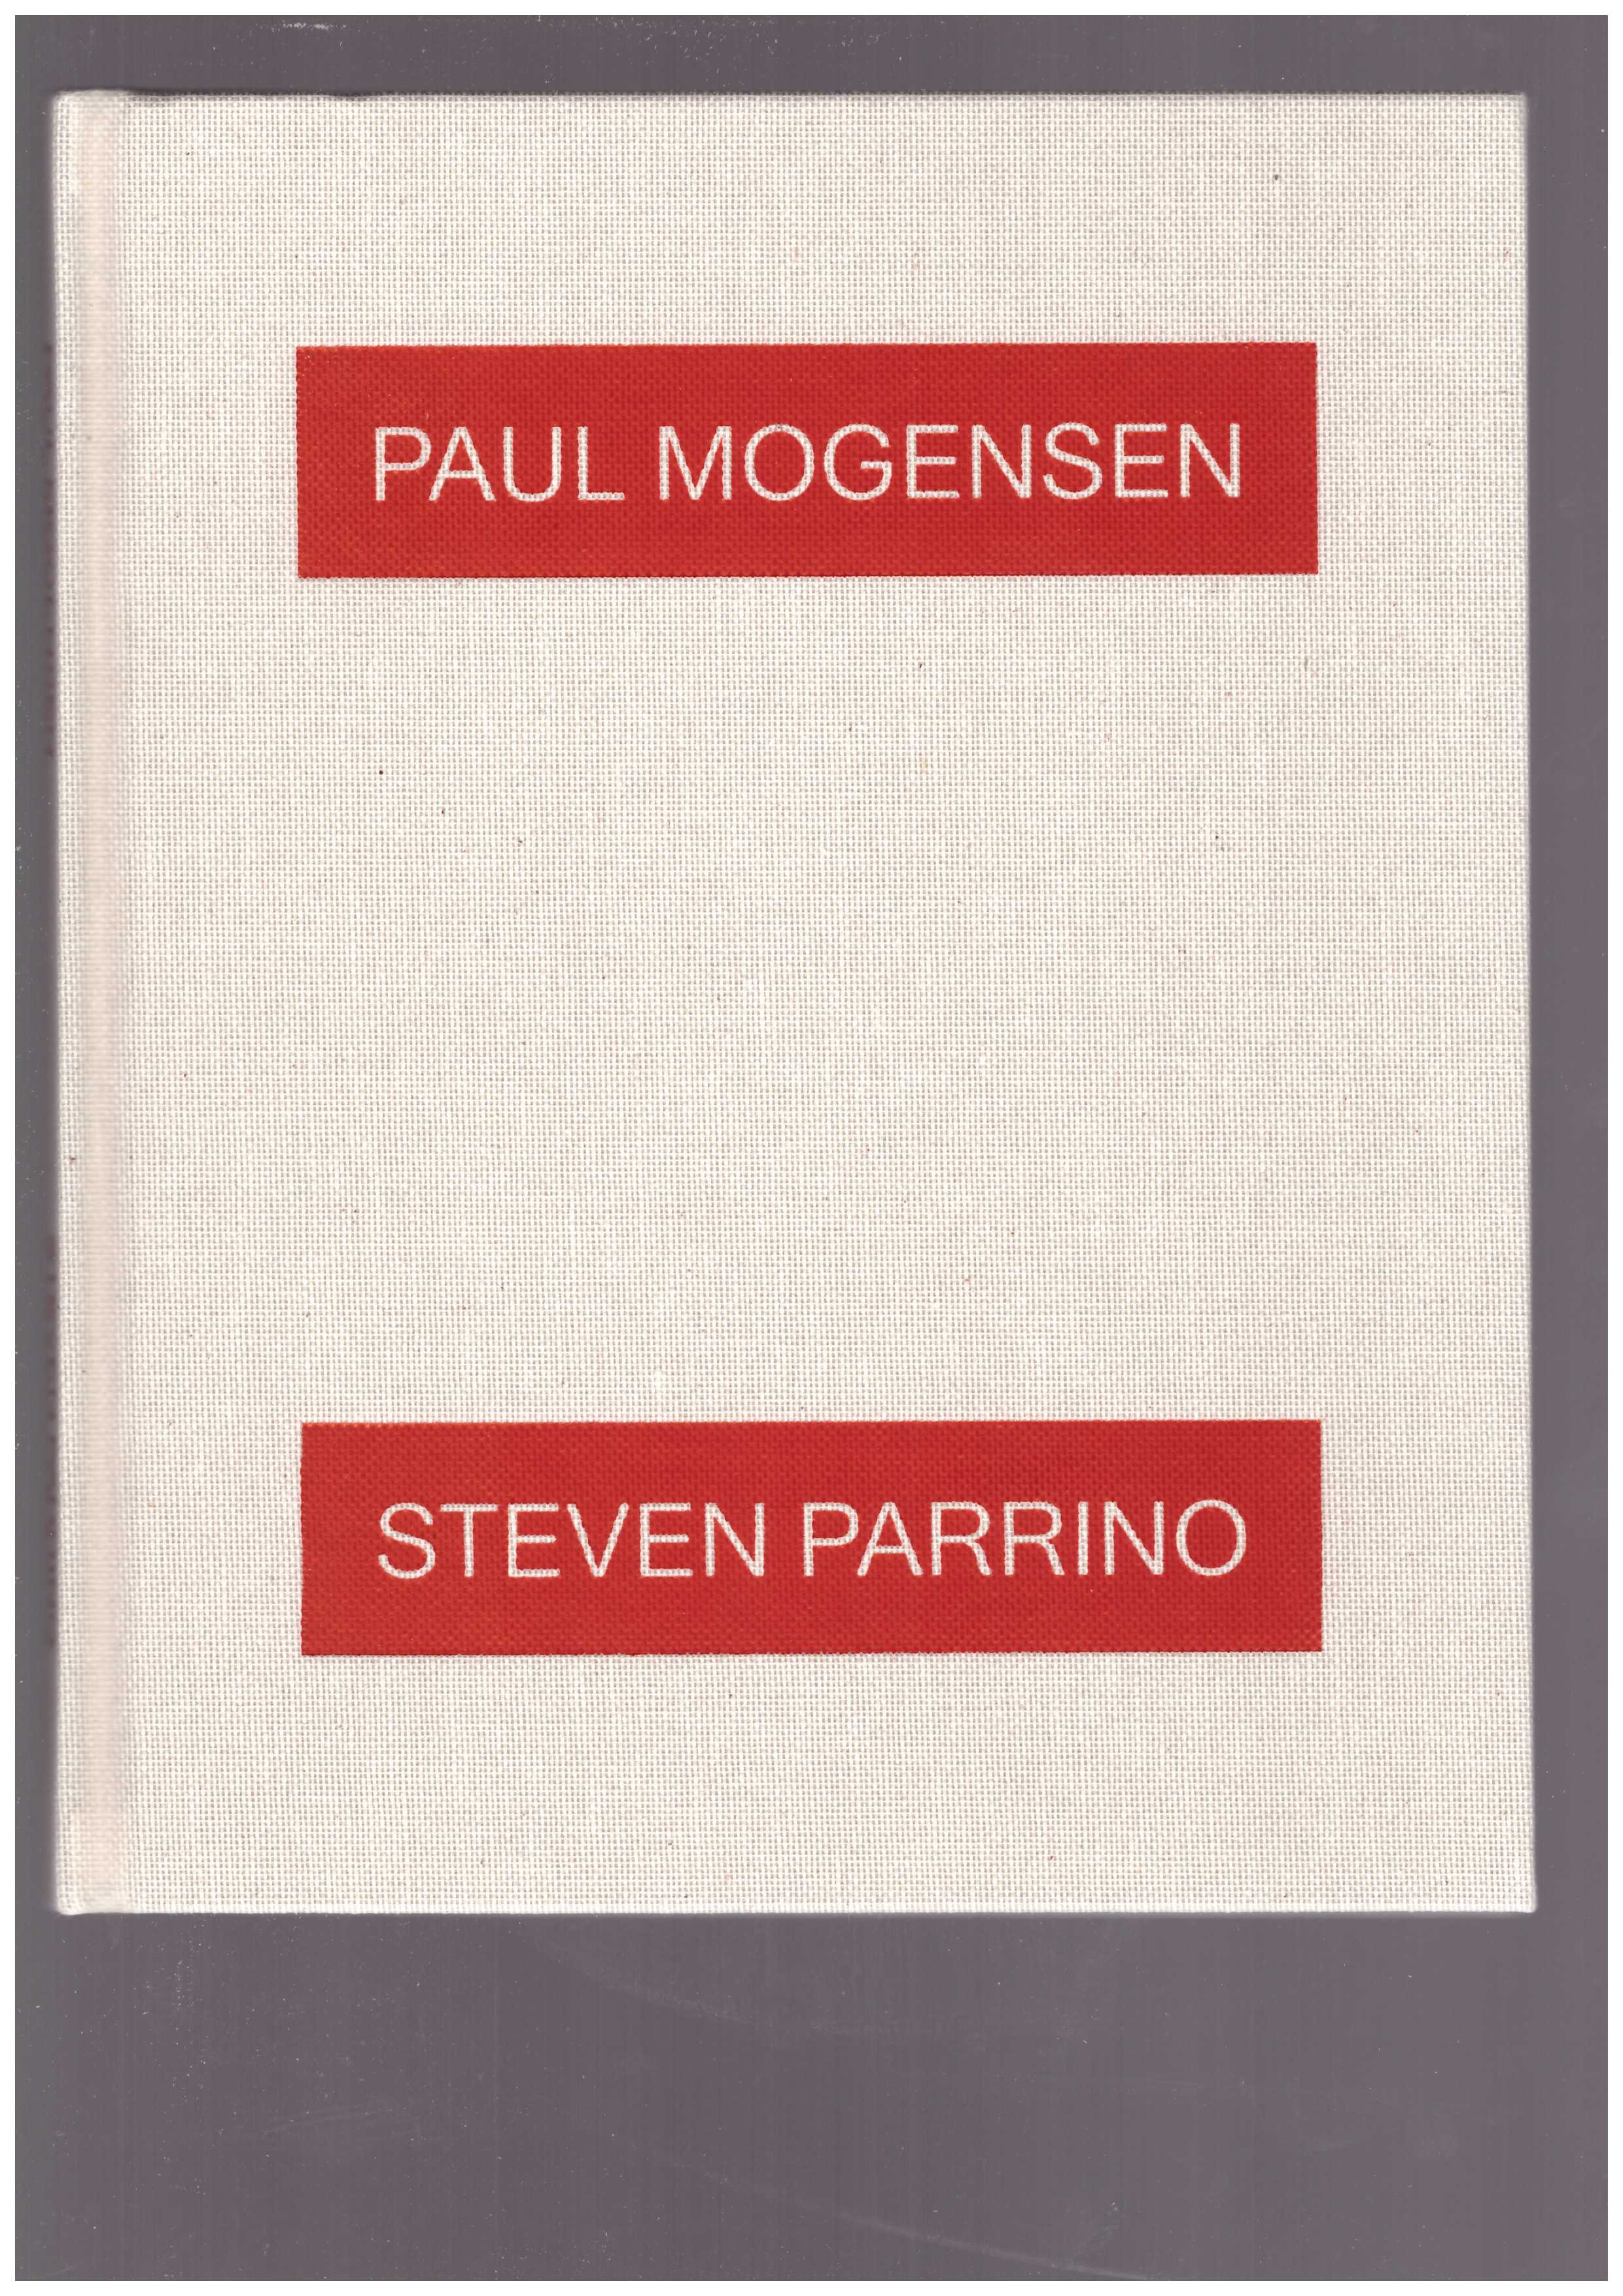 NICKAS, Bob (ed.) - Paul Mogensen – Steven Parrino